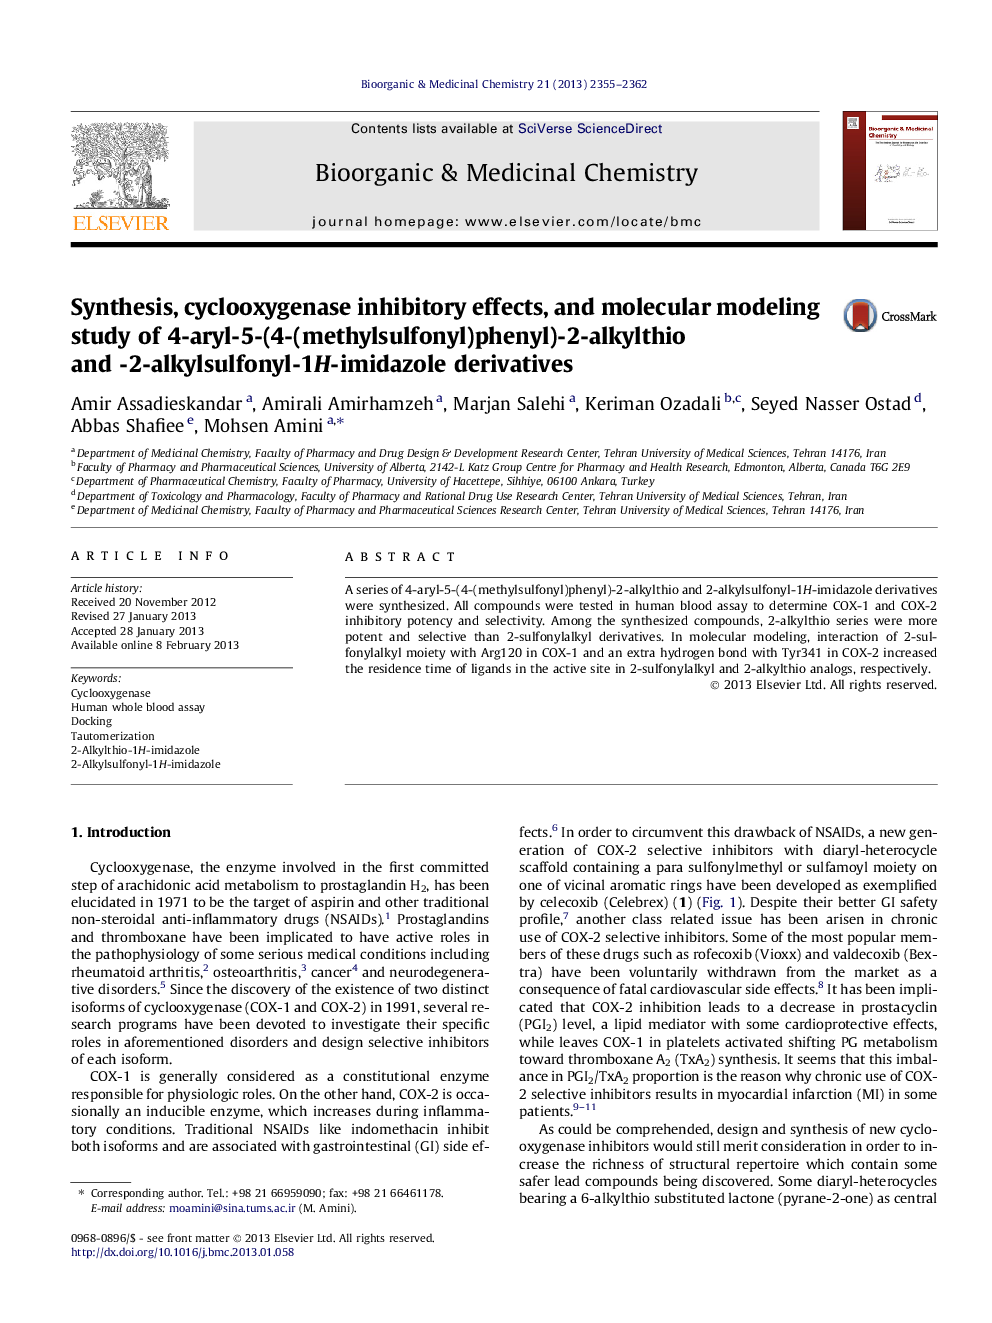 Synthesis, cyclooxygenase inhibitory effects, and molecular modeling study of 4-aryl-5-(4-(methylsulfonyl)phenyl)-2-alkylthio and -2-alkylsulfonyl-1H-imidazole derivatives